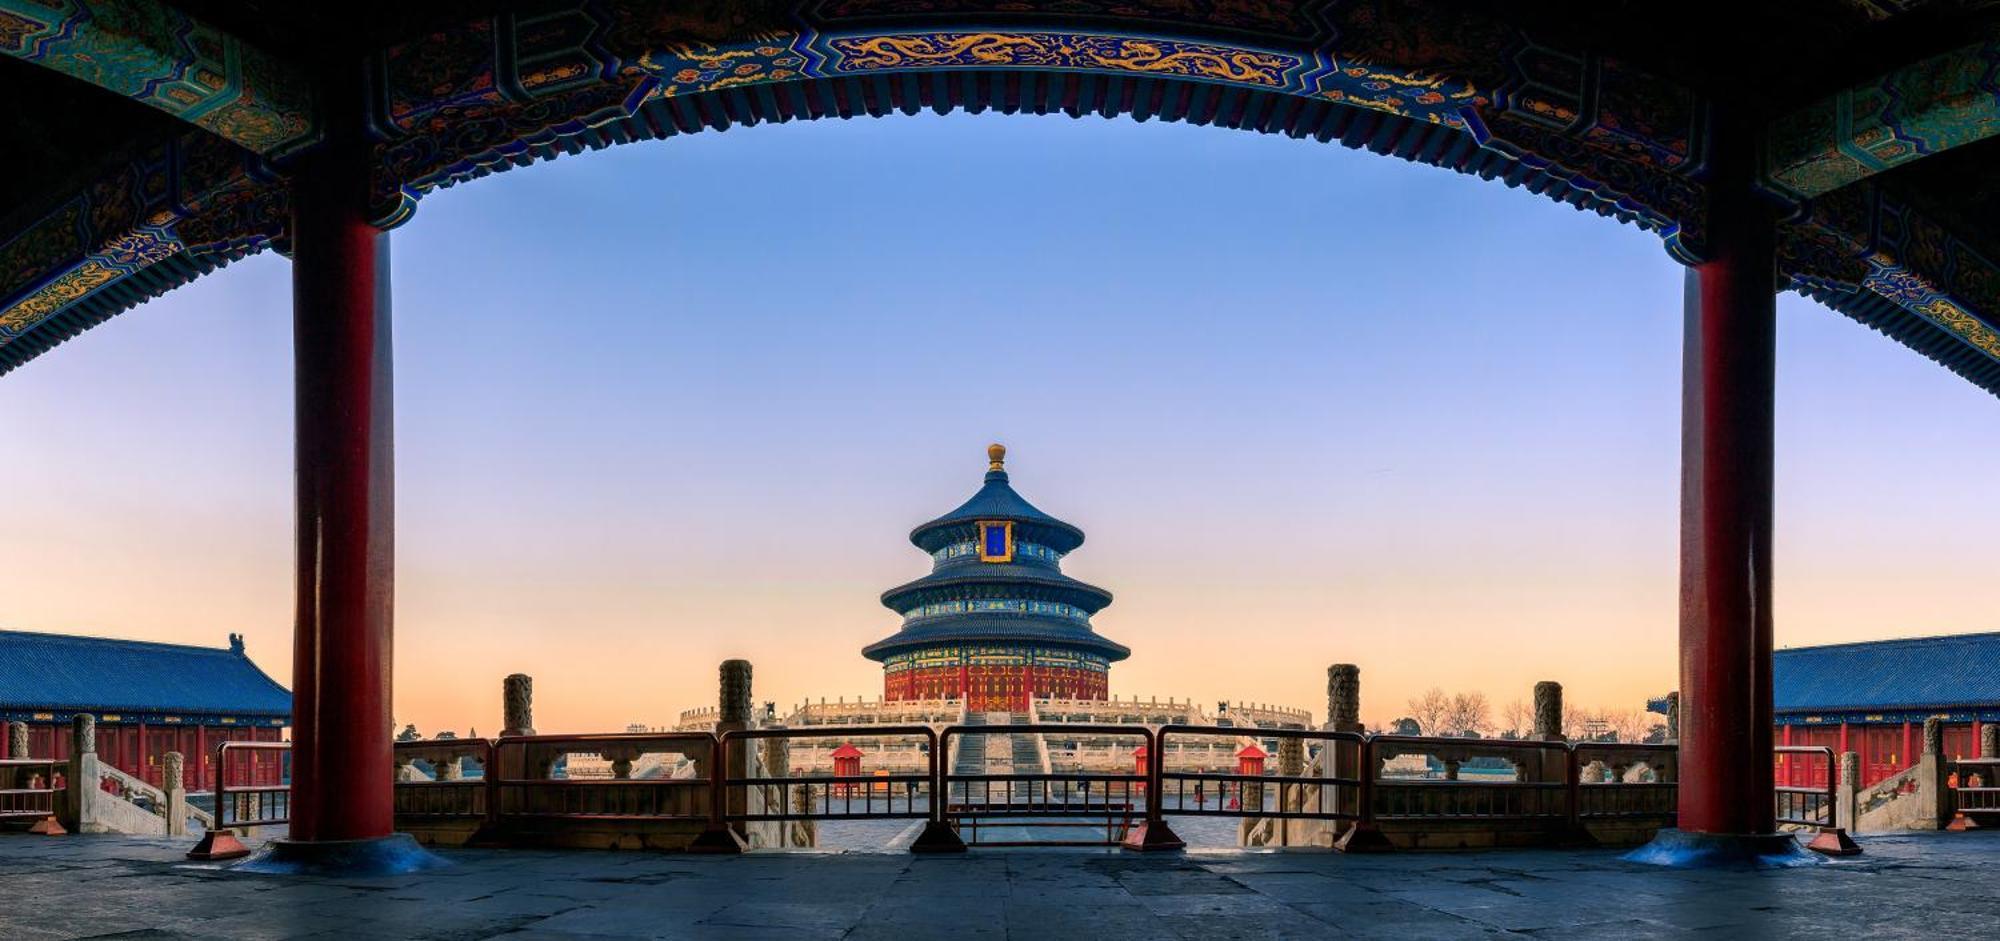 Hotel China World Summit Wing, Peking Exterior foto